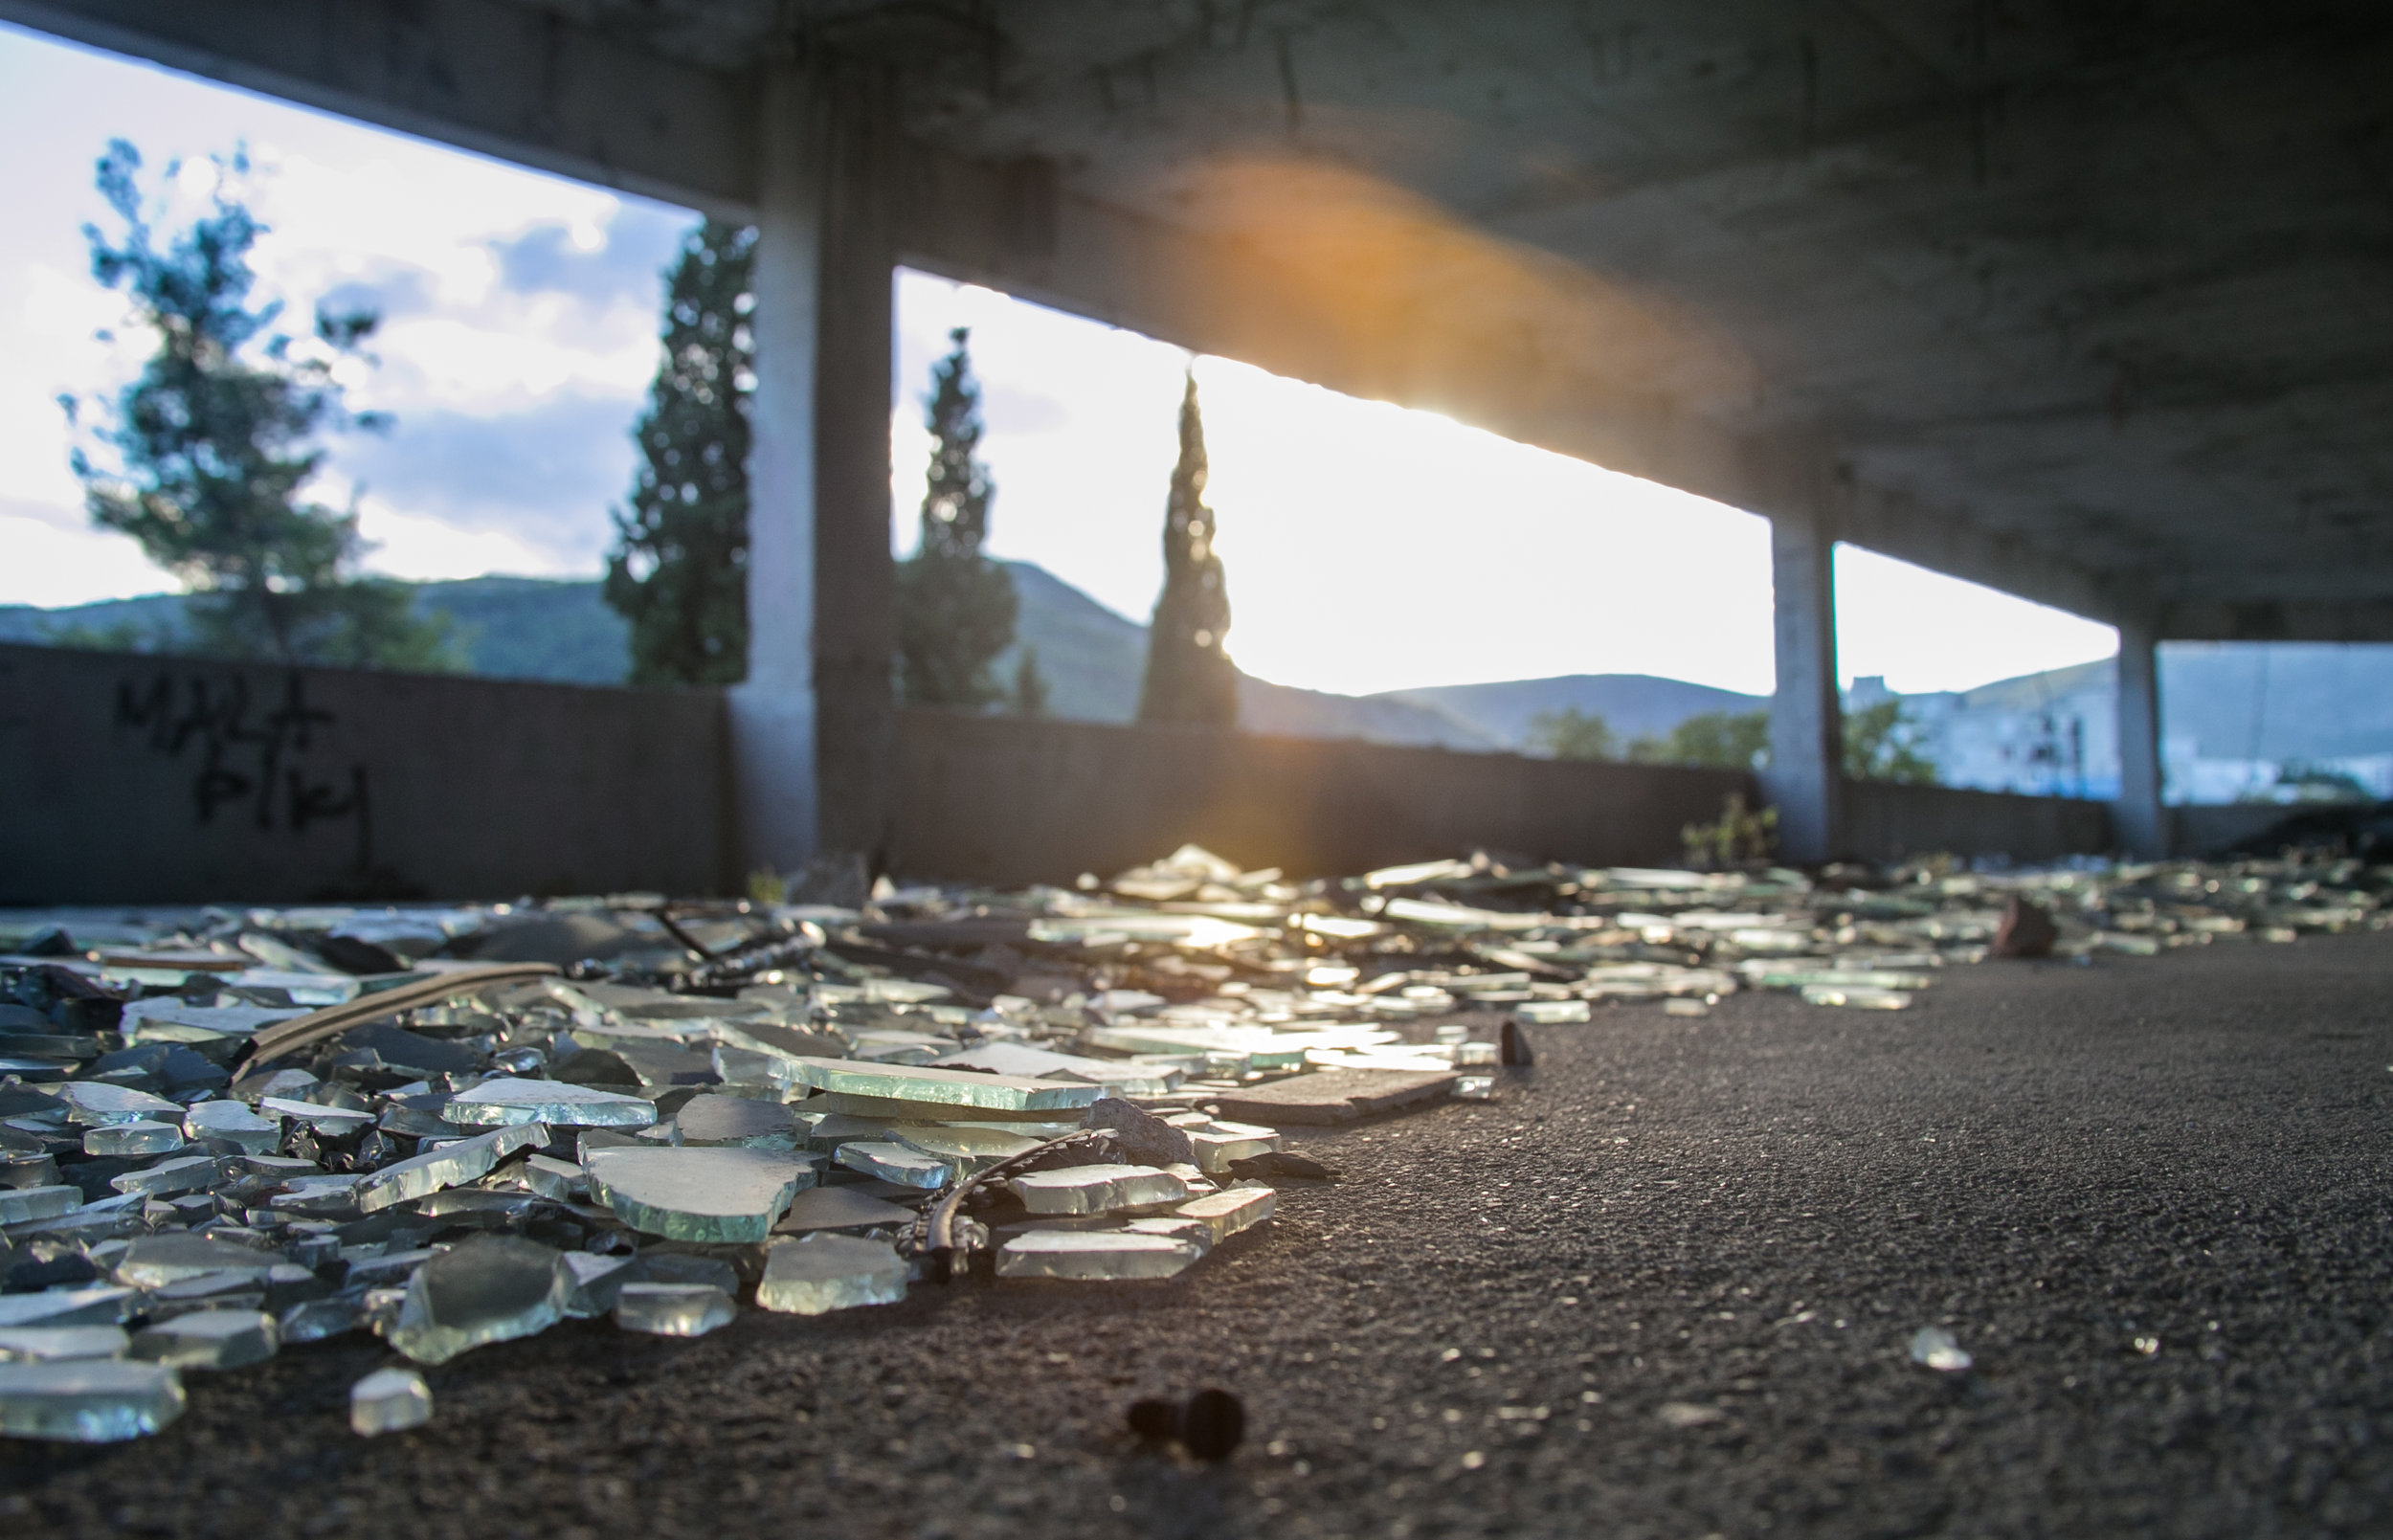  Shattered glass riddles the floor of an abandoned sniper tower left over from the Bosnian War in Mostar, Bosnia.&nbsp; 